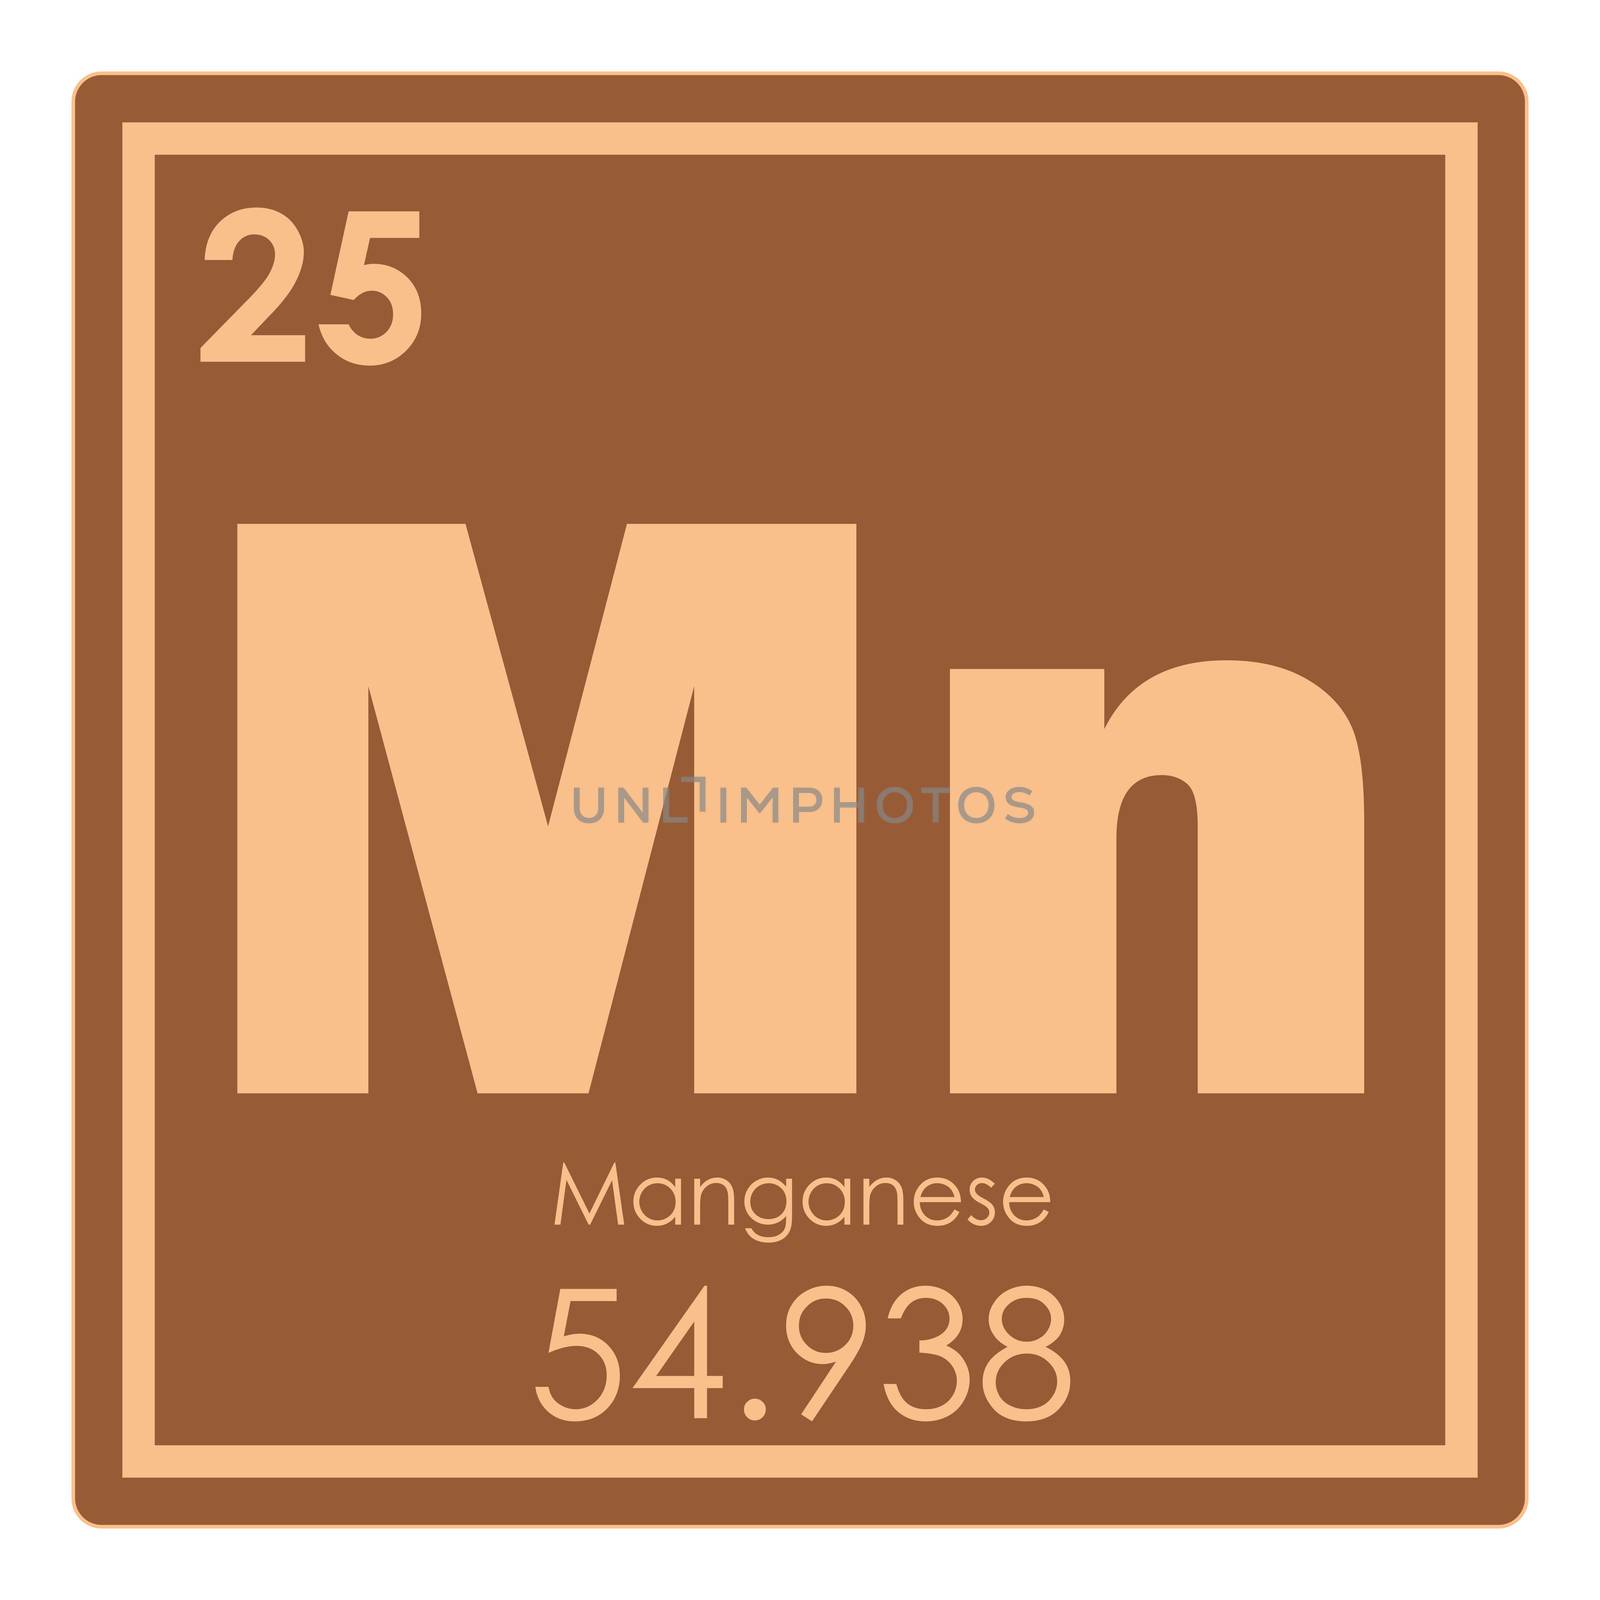 Manganese chemical element by tony4urban